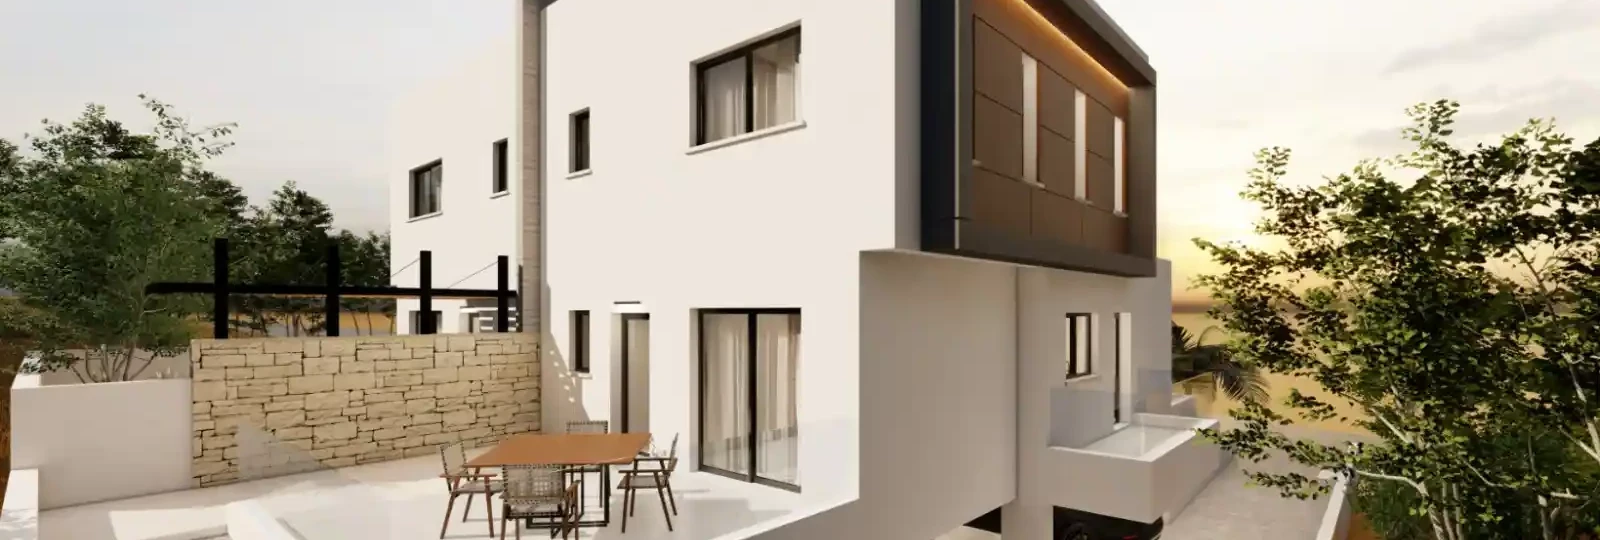 3-bedroom semi-detached fоr sаle €400.000, image 1